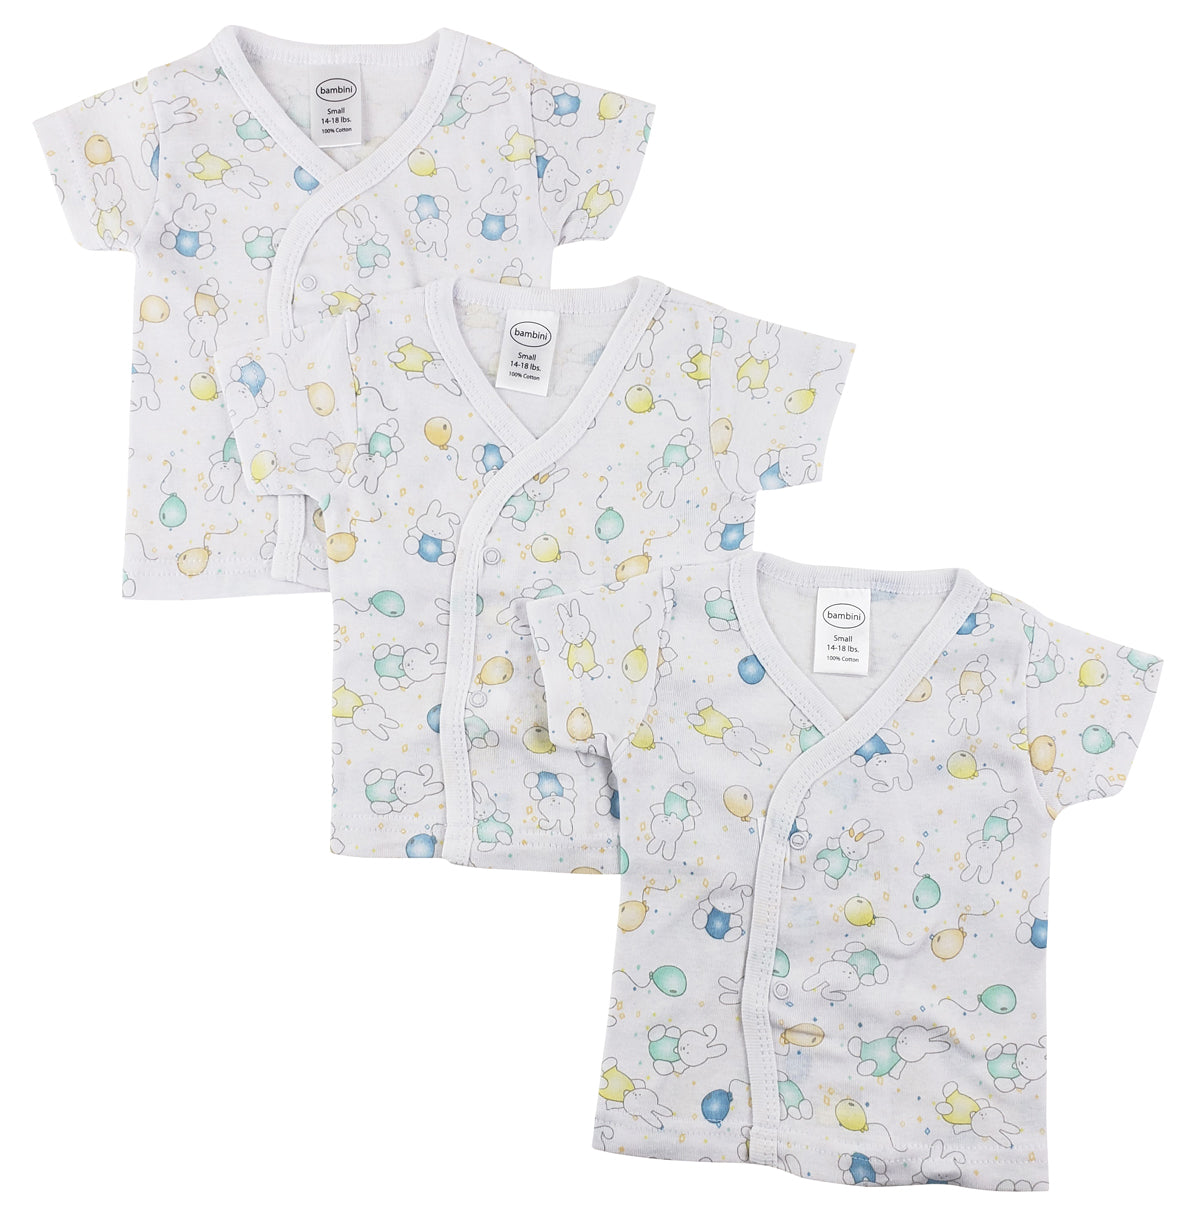 Infant Side Snap Short Sleeve Shirt - 3 Pack NC_0204